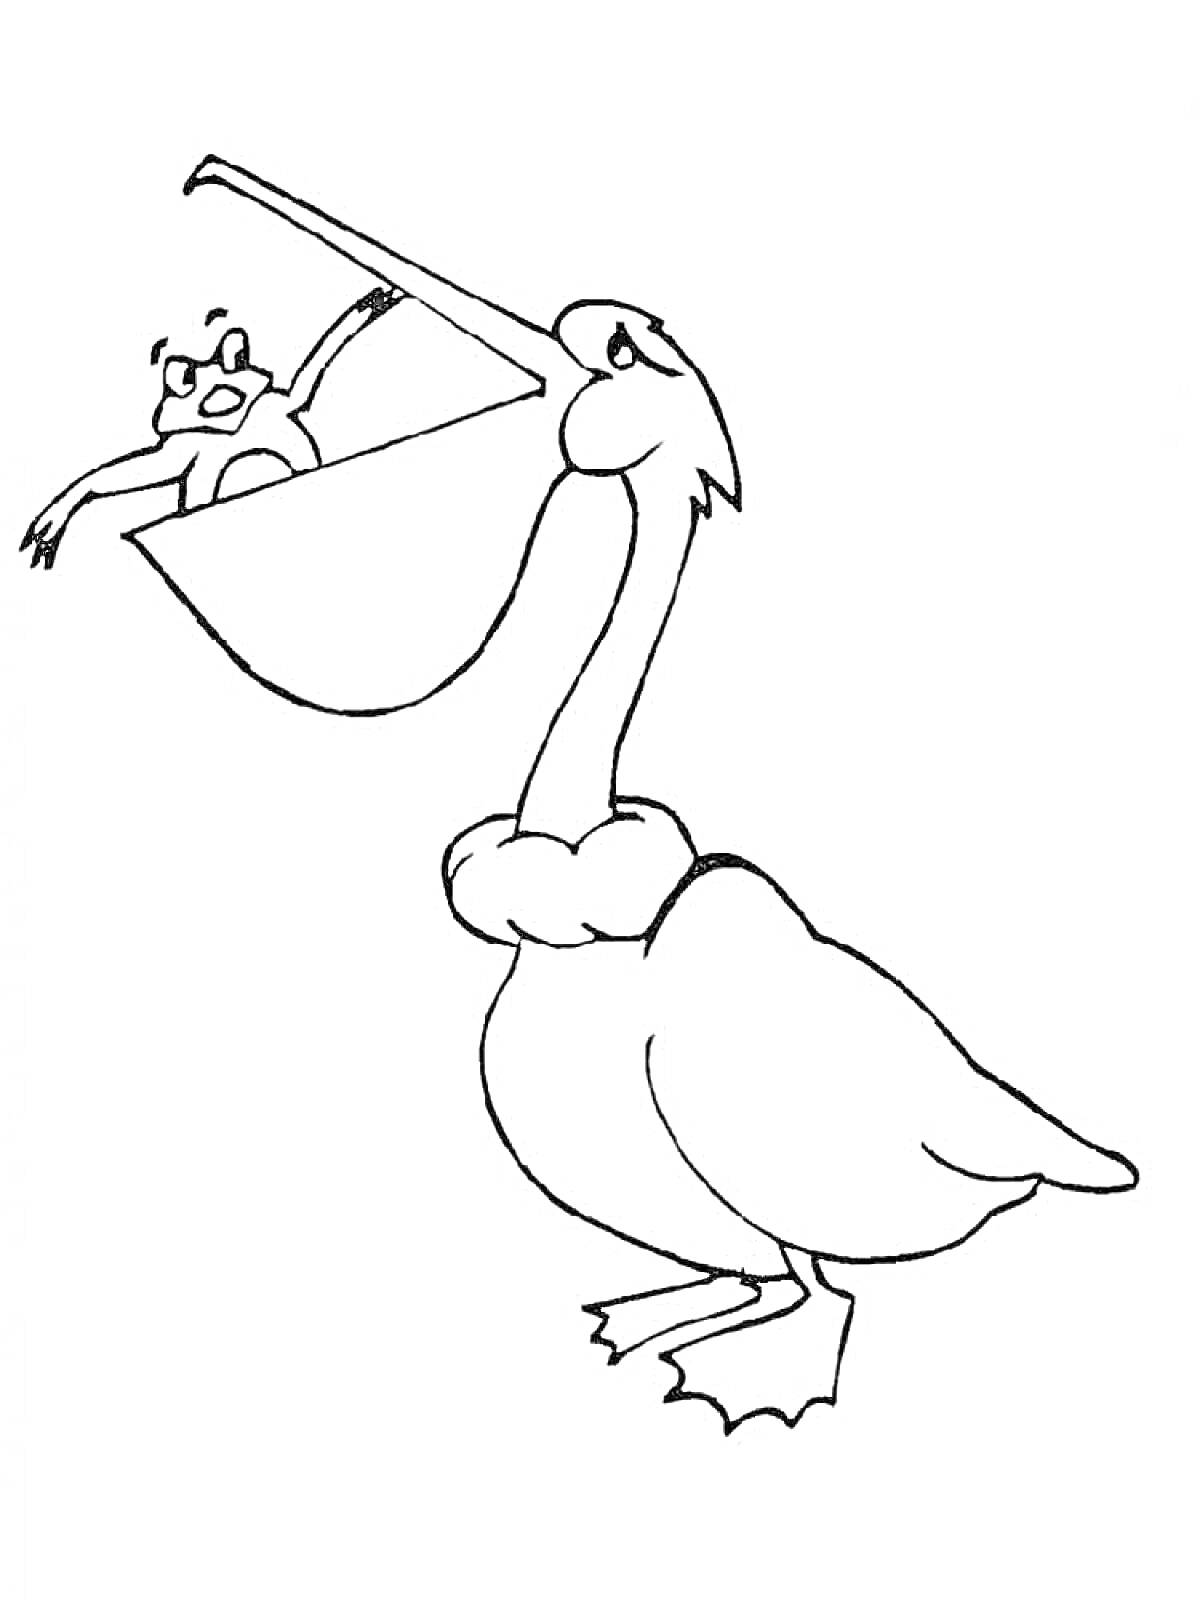 Пеликан с лягушкой в клюве